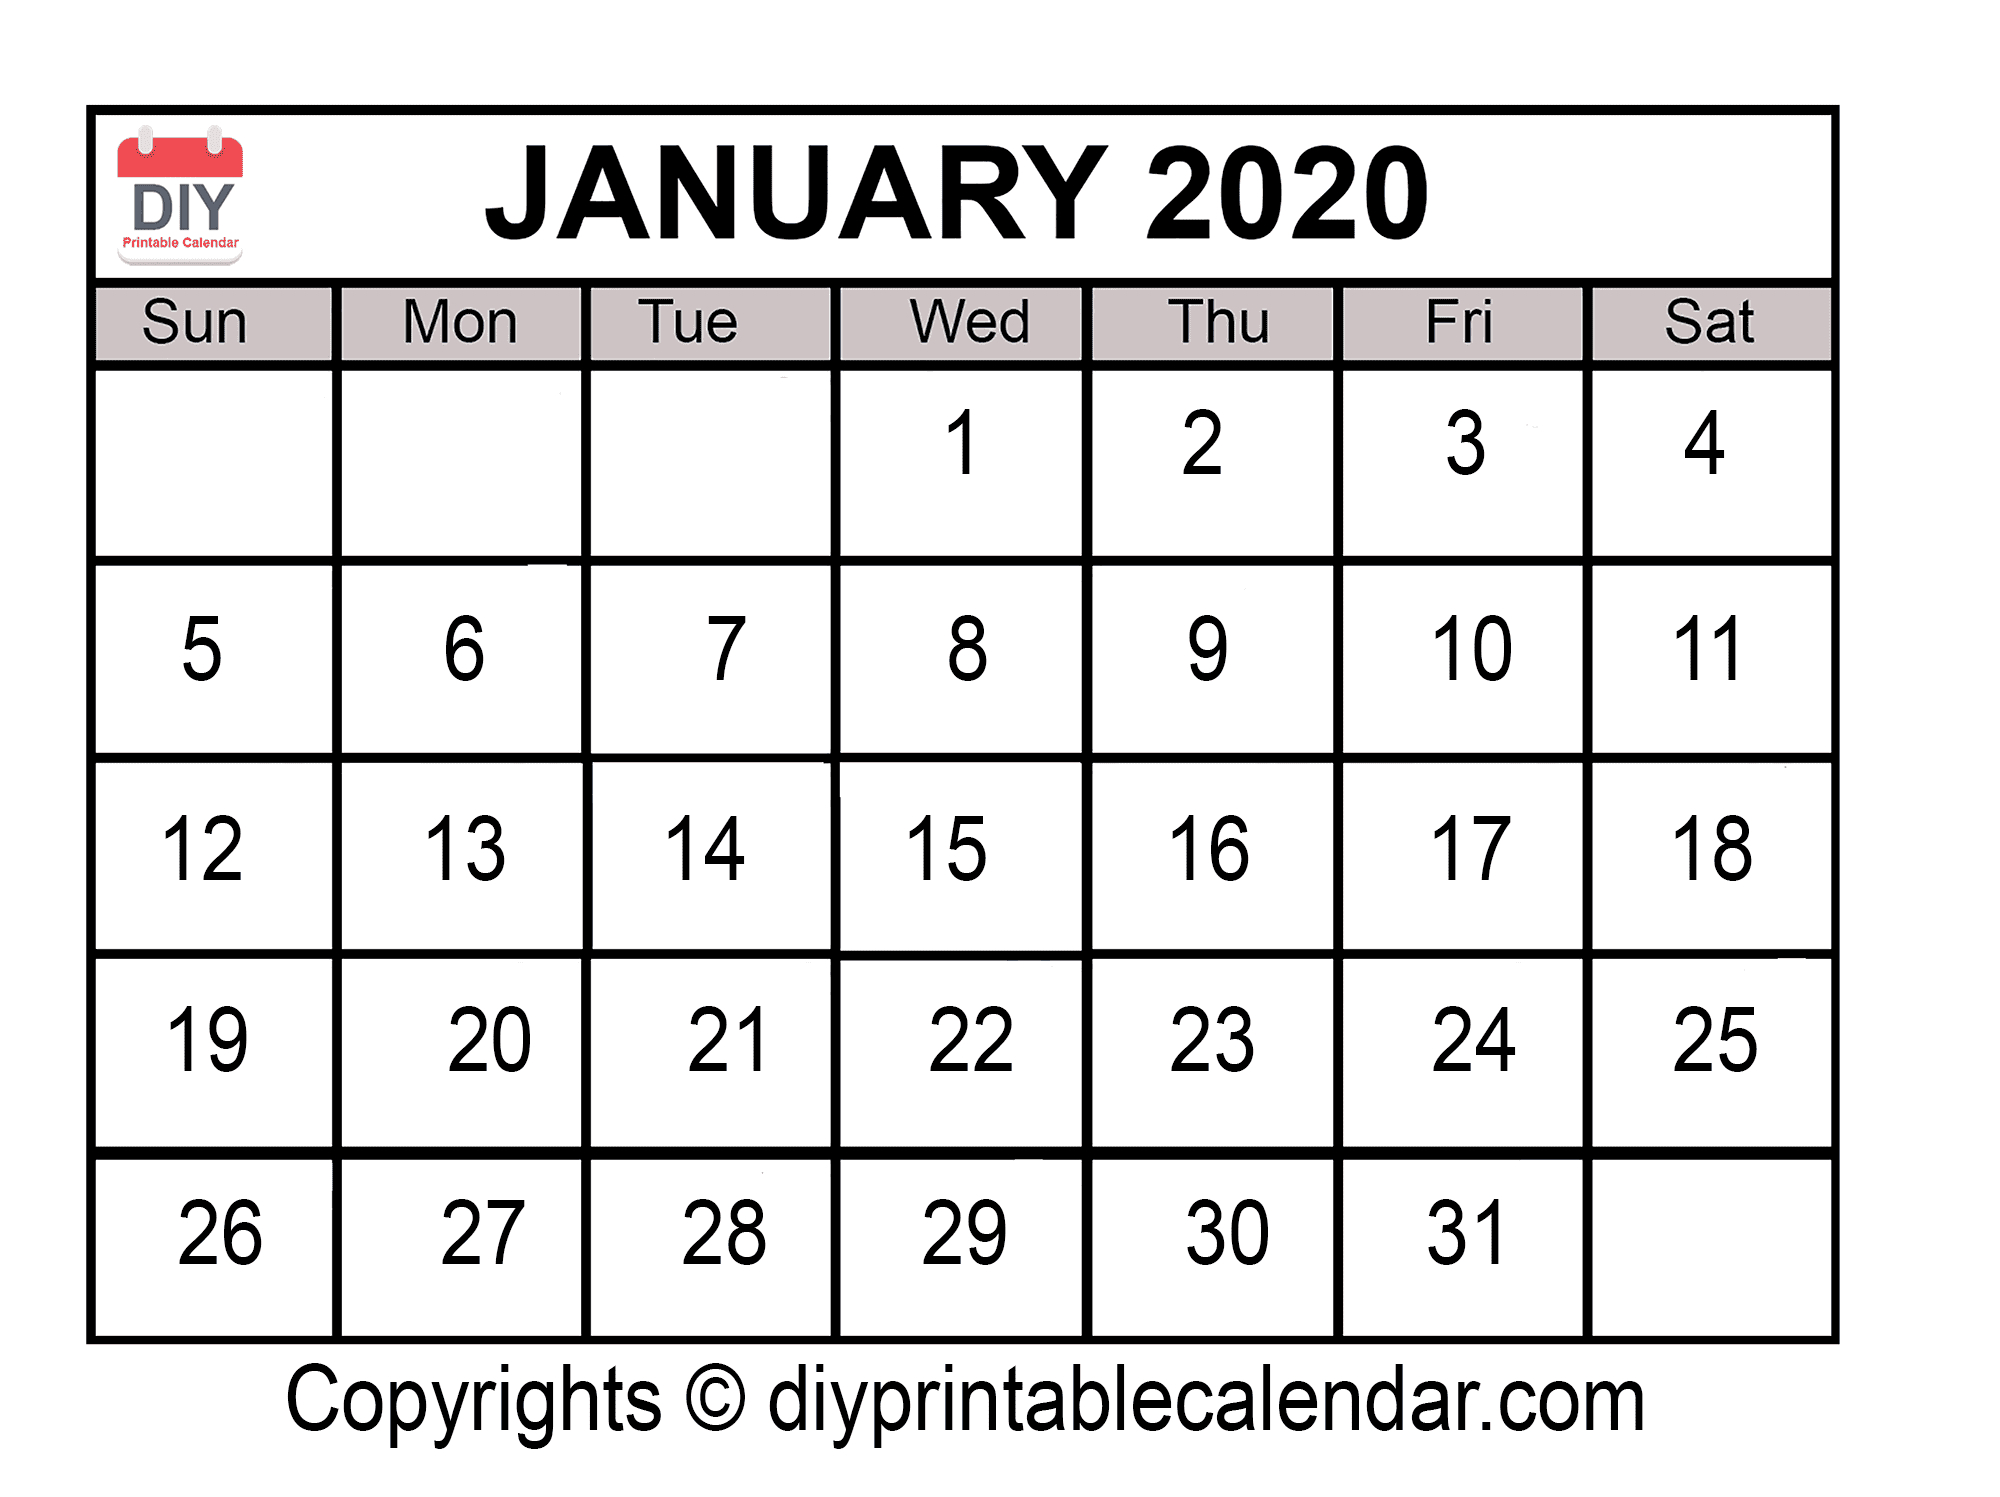 January 2020 Calendar Clipart pertaining to January 2020 Calendar Png